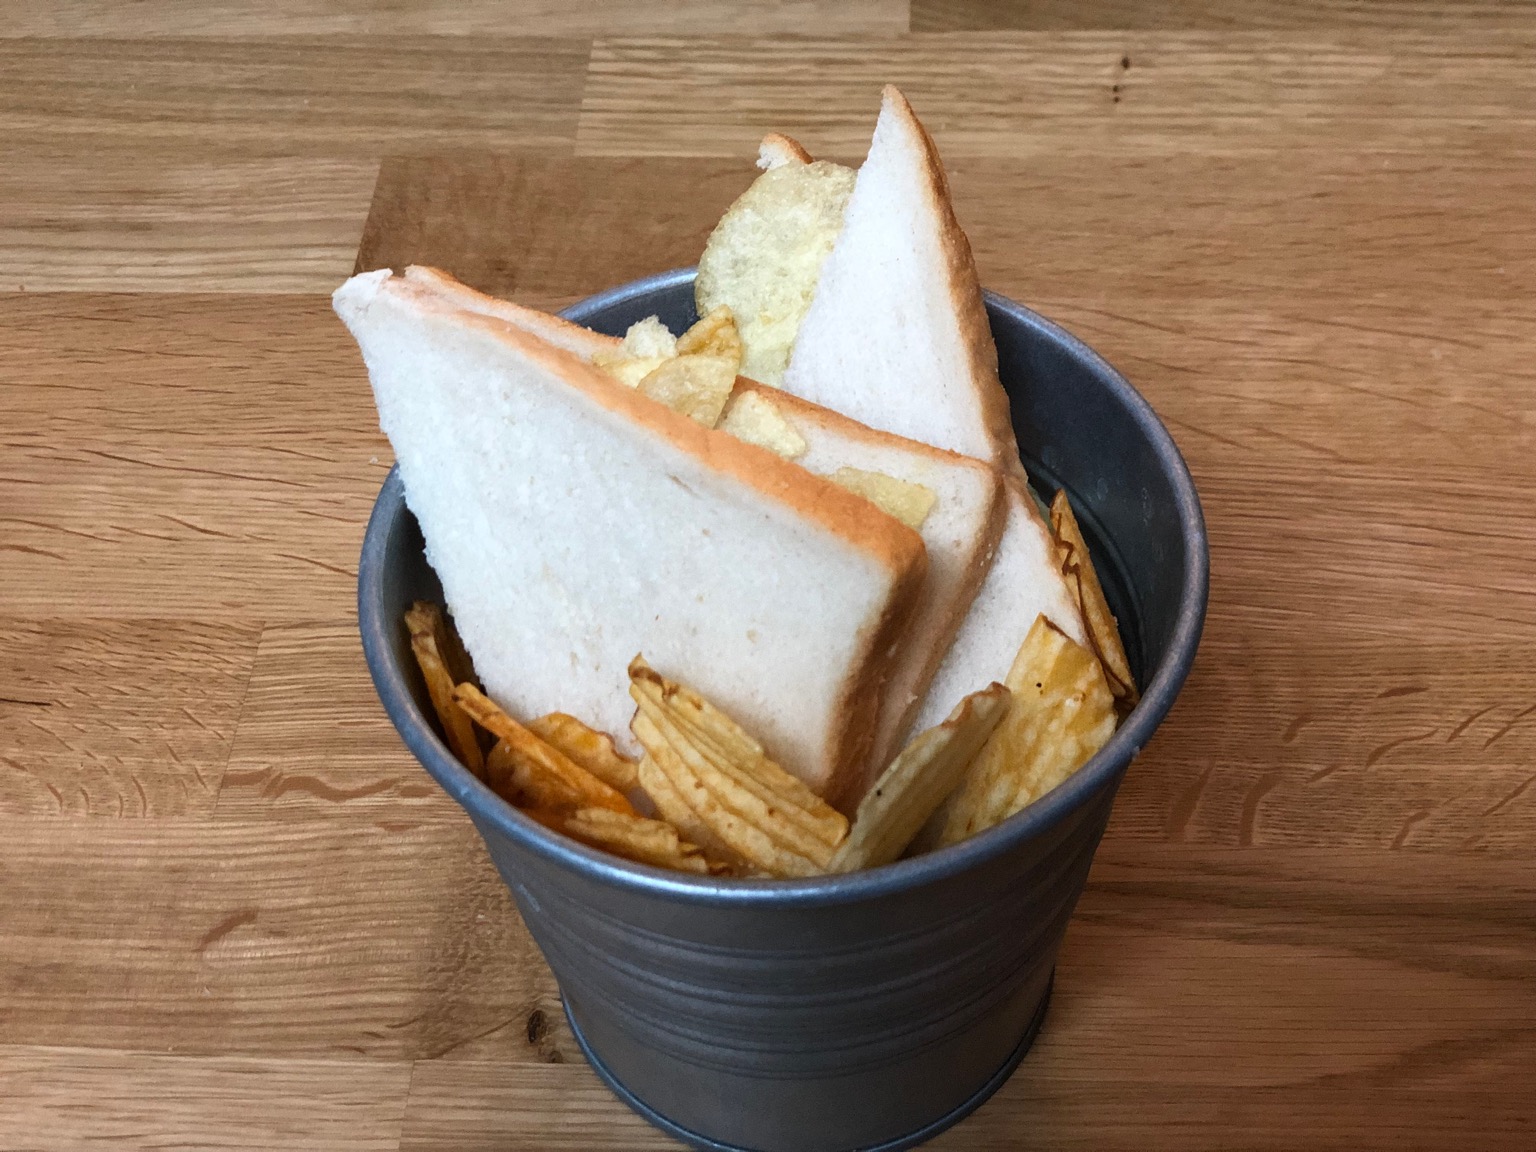 Crisp sandwich and loose crisps in metal bucket